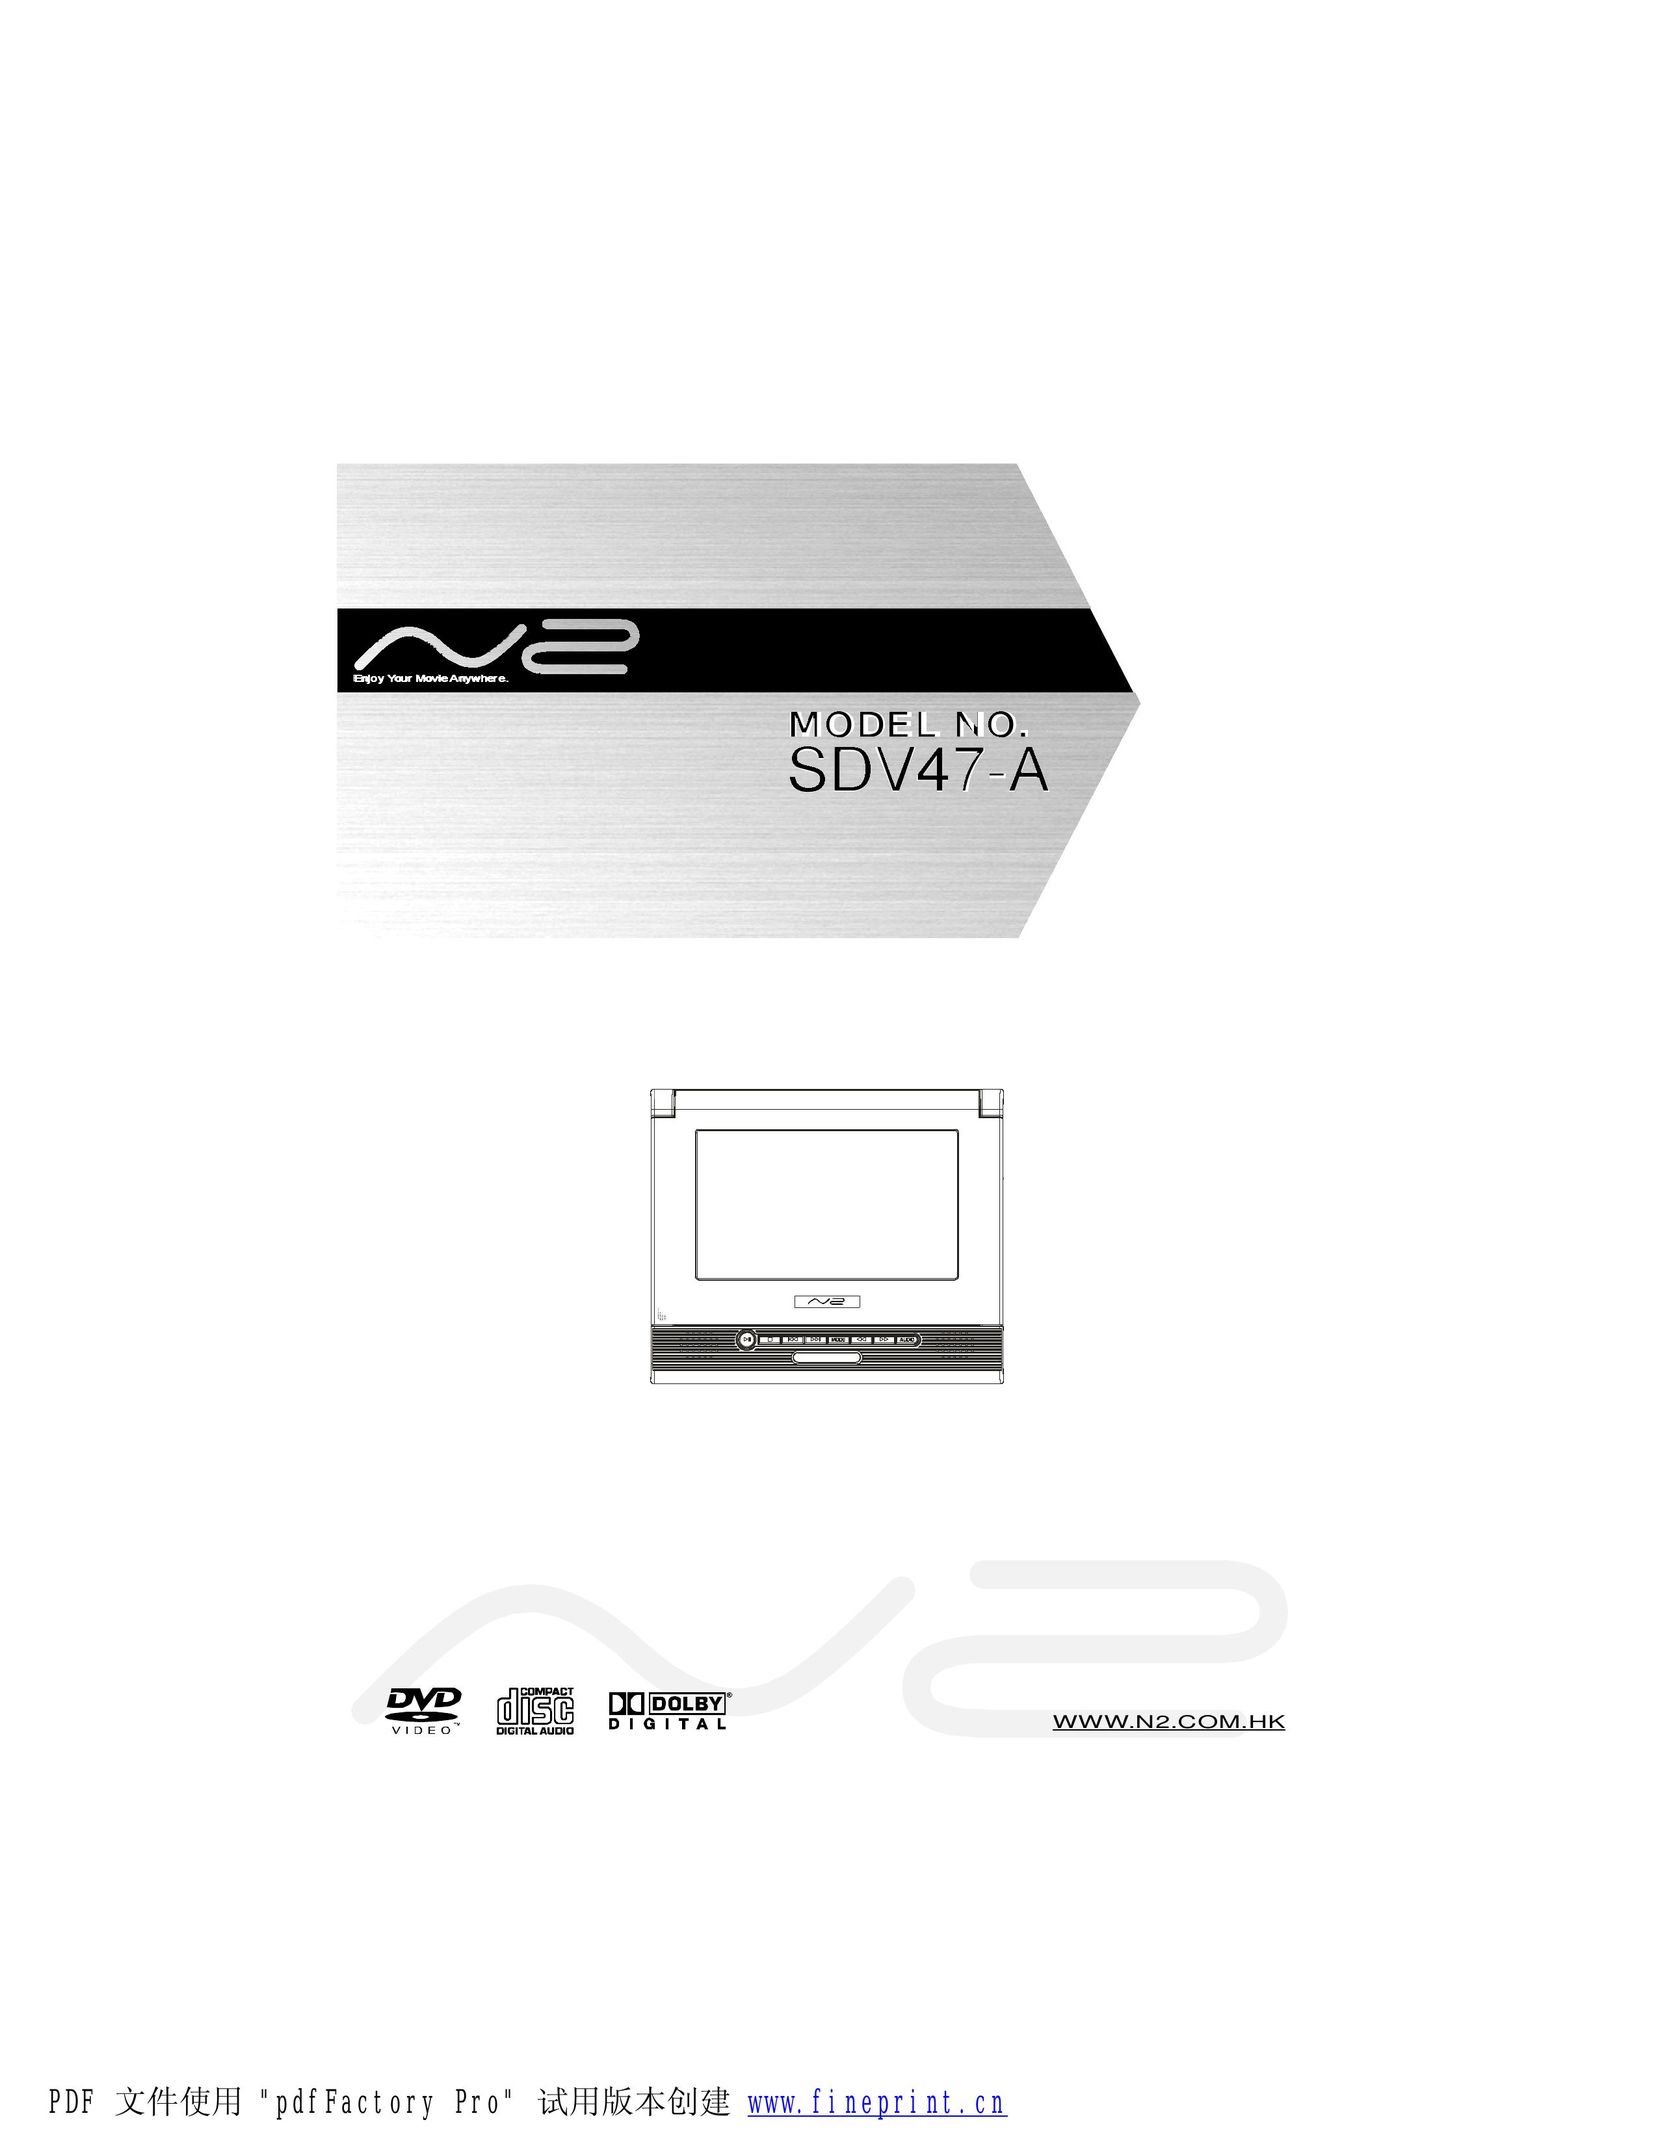 NextBase SDV47-A Portable DVD Player User Manual